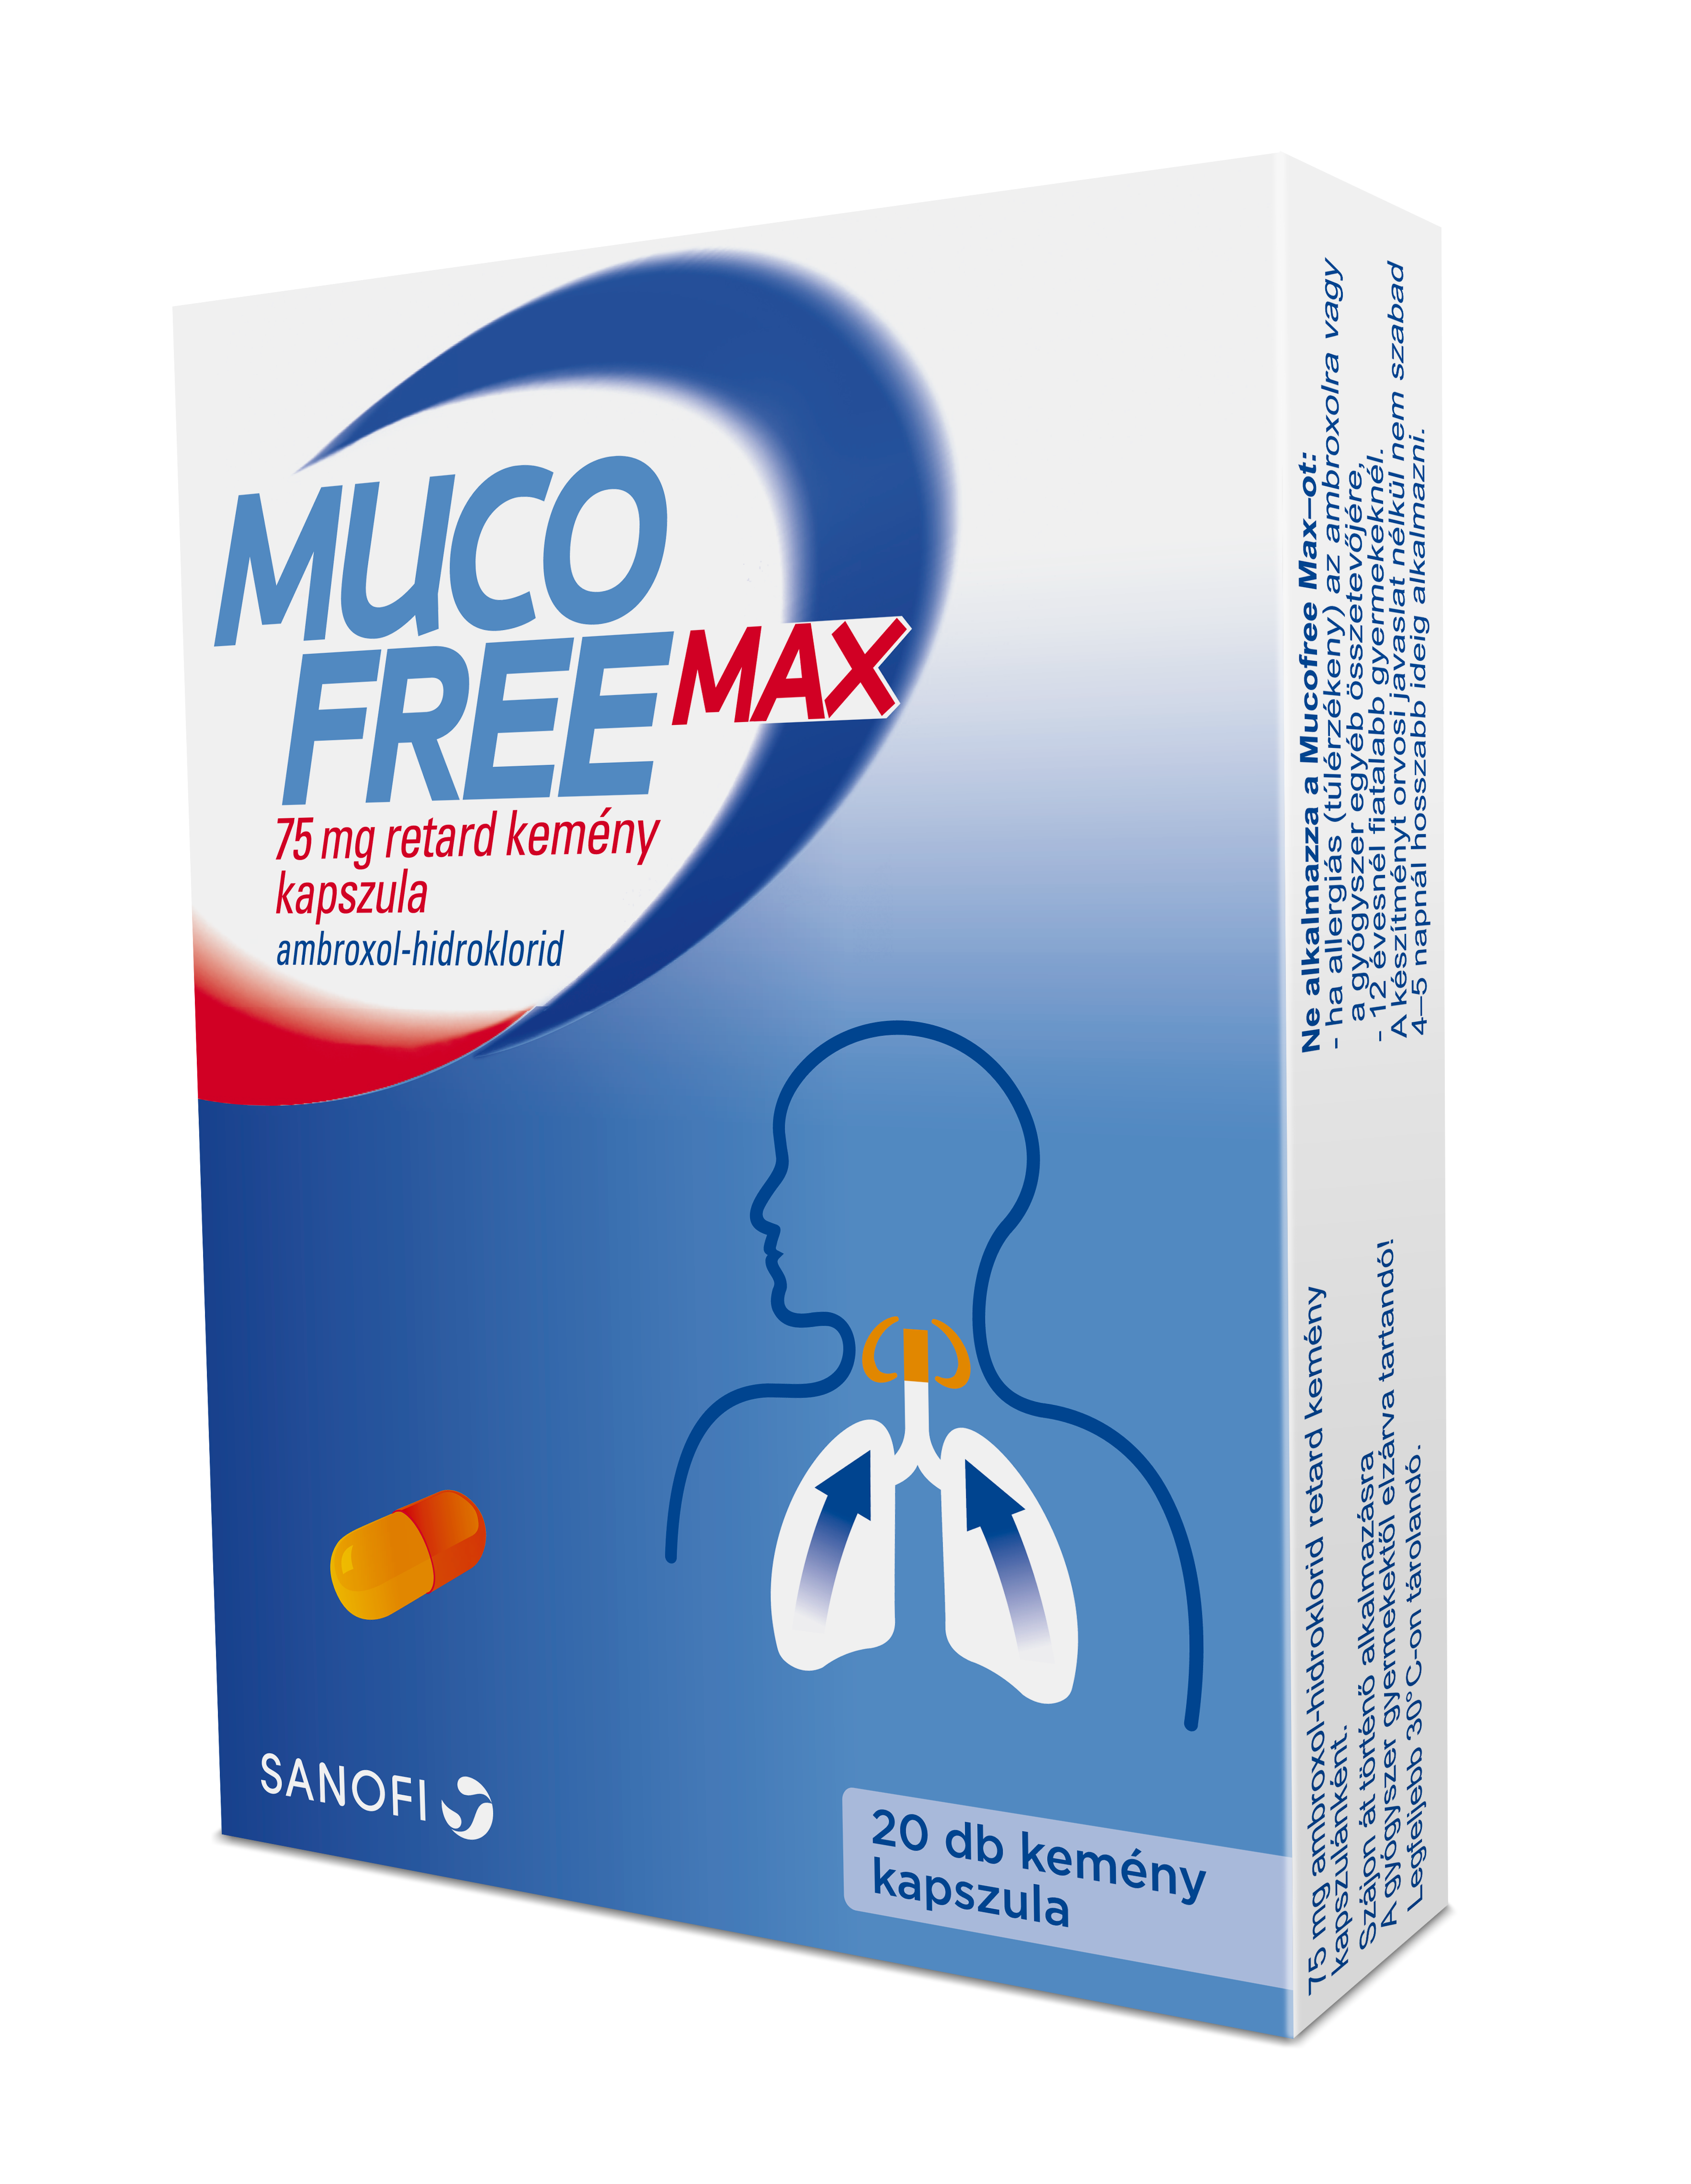 Mucofree Max 75 mg retard kemény kapszula 20x